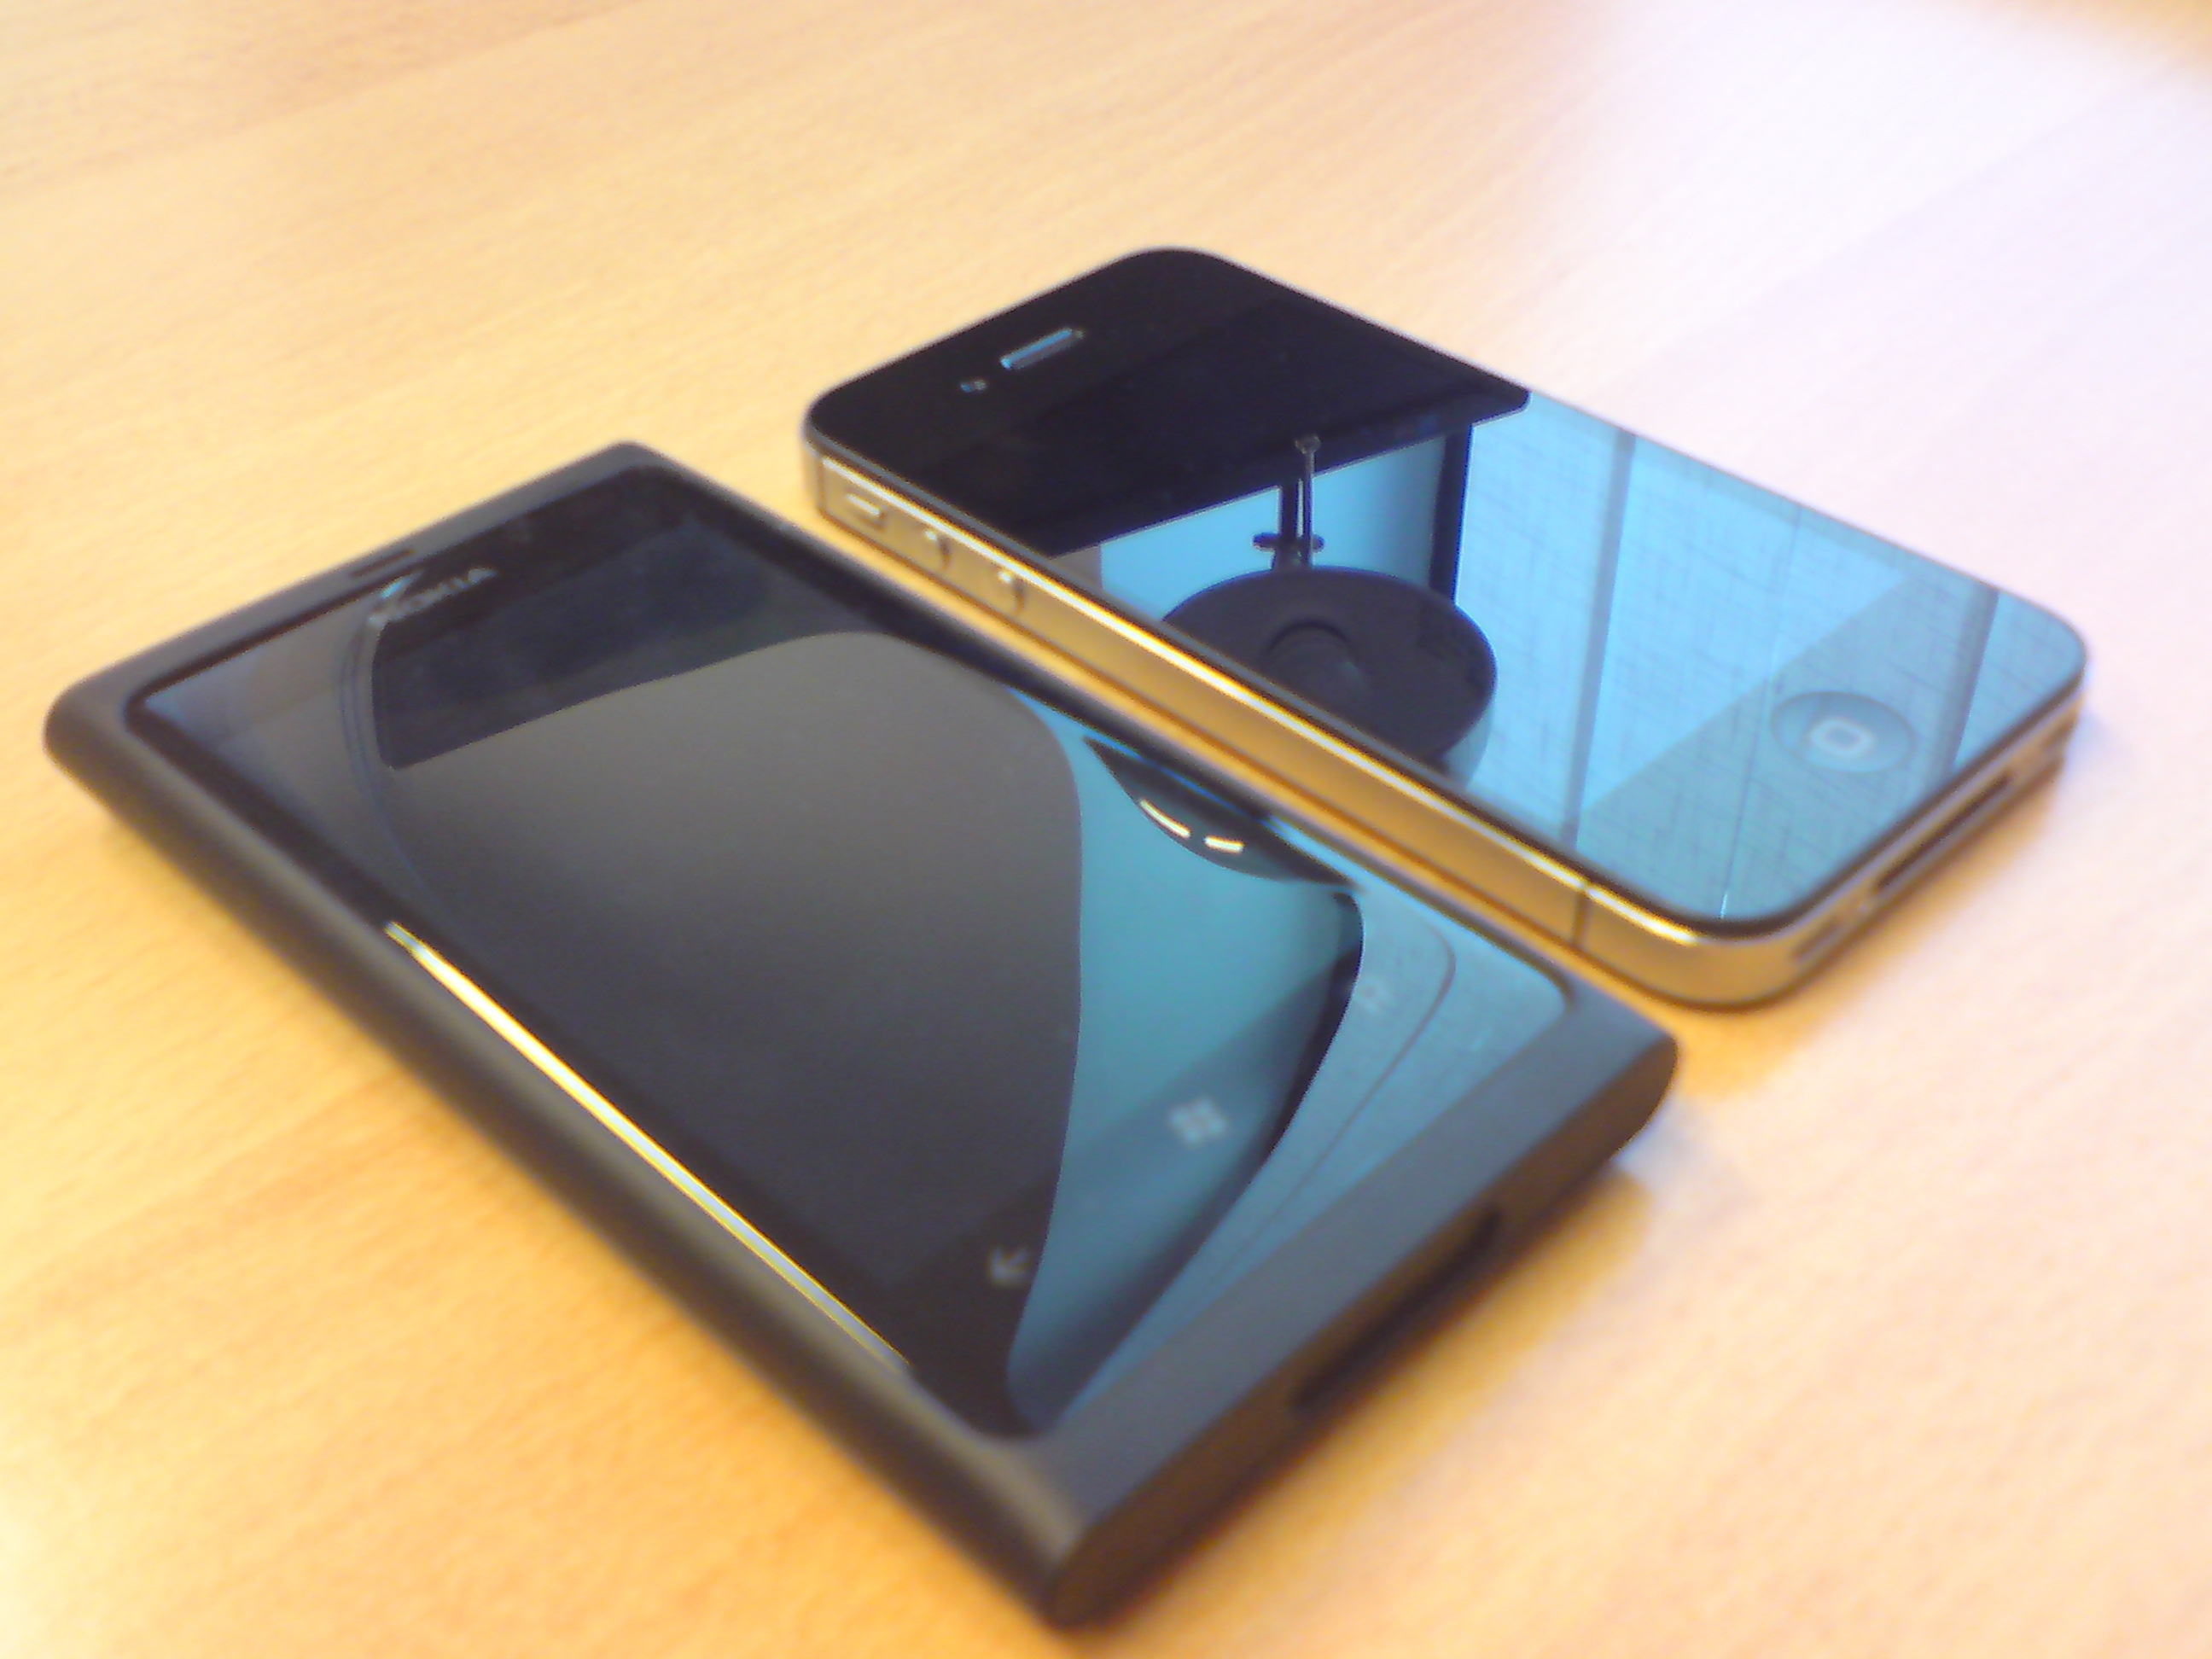 Nokia lumia vs iphone 4s